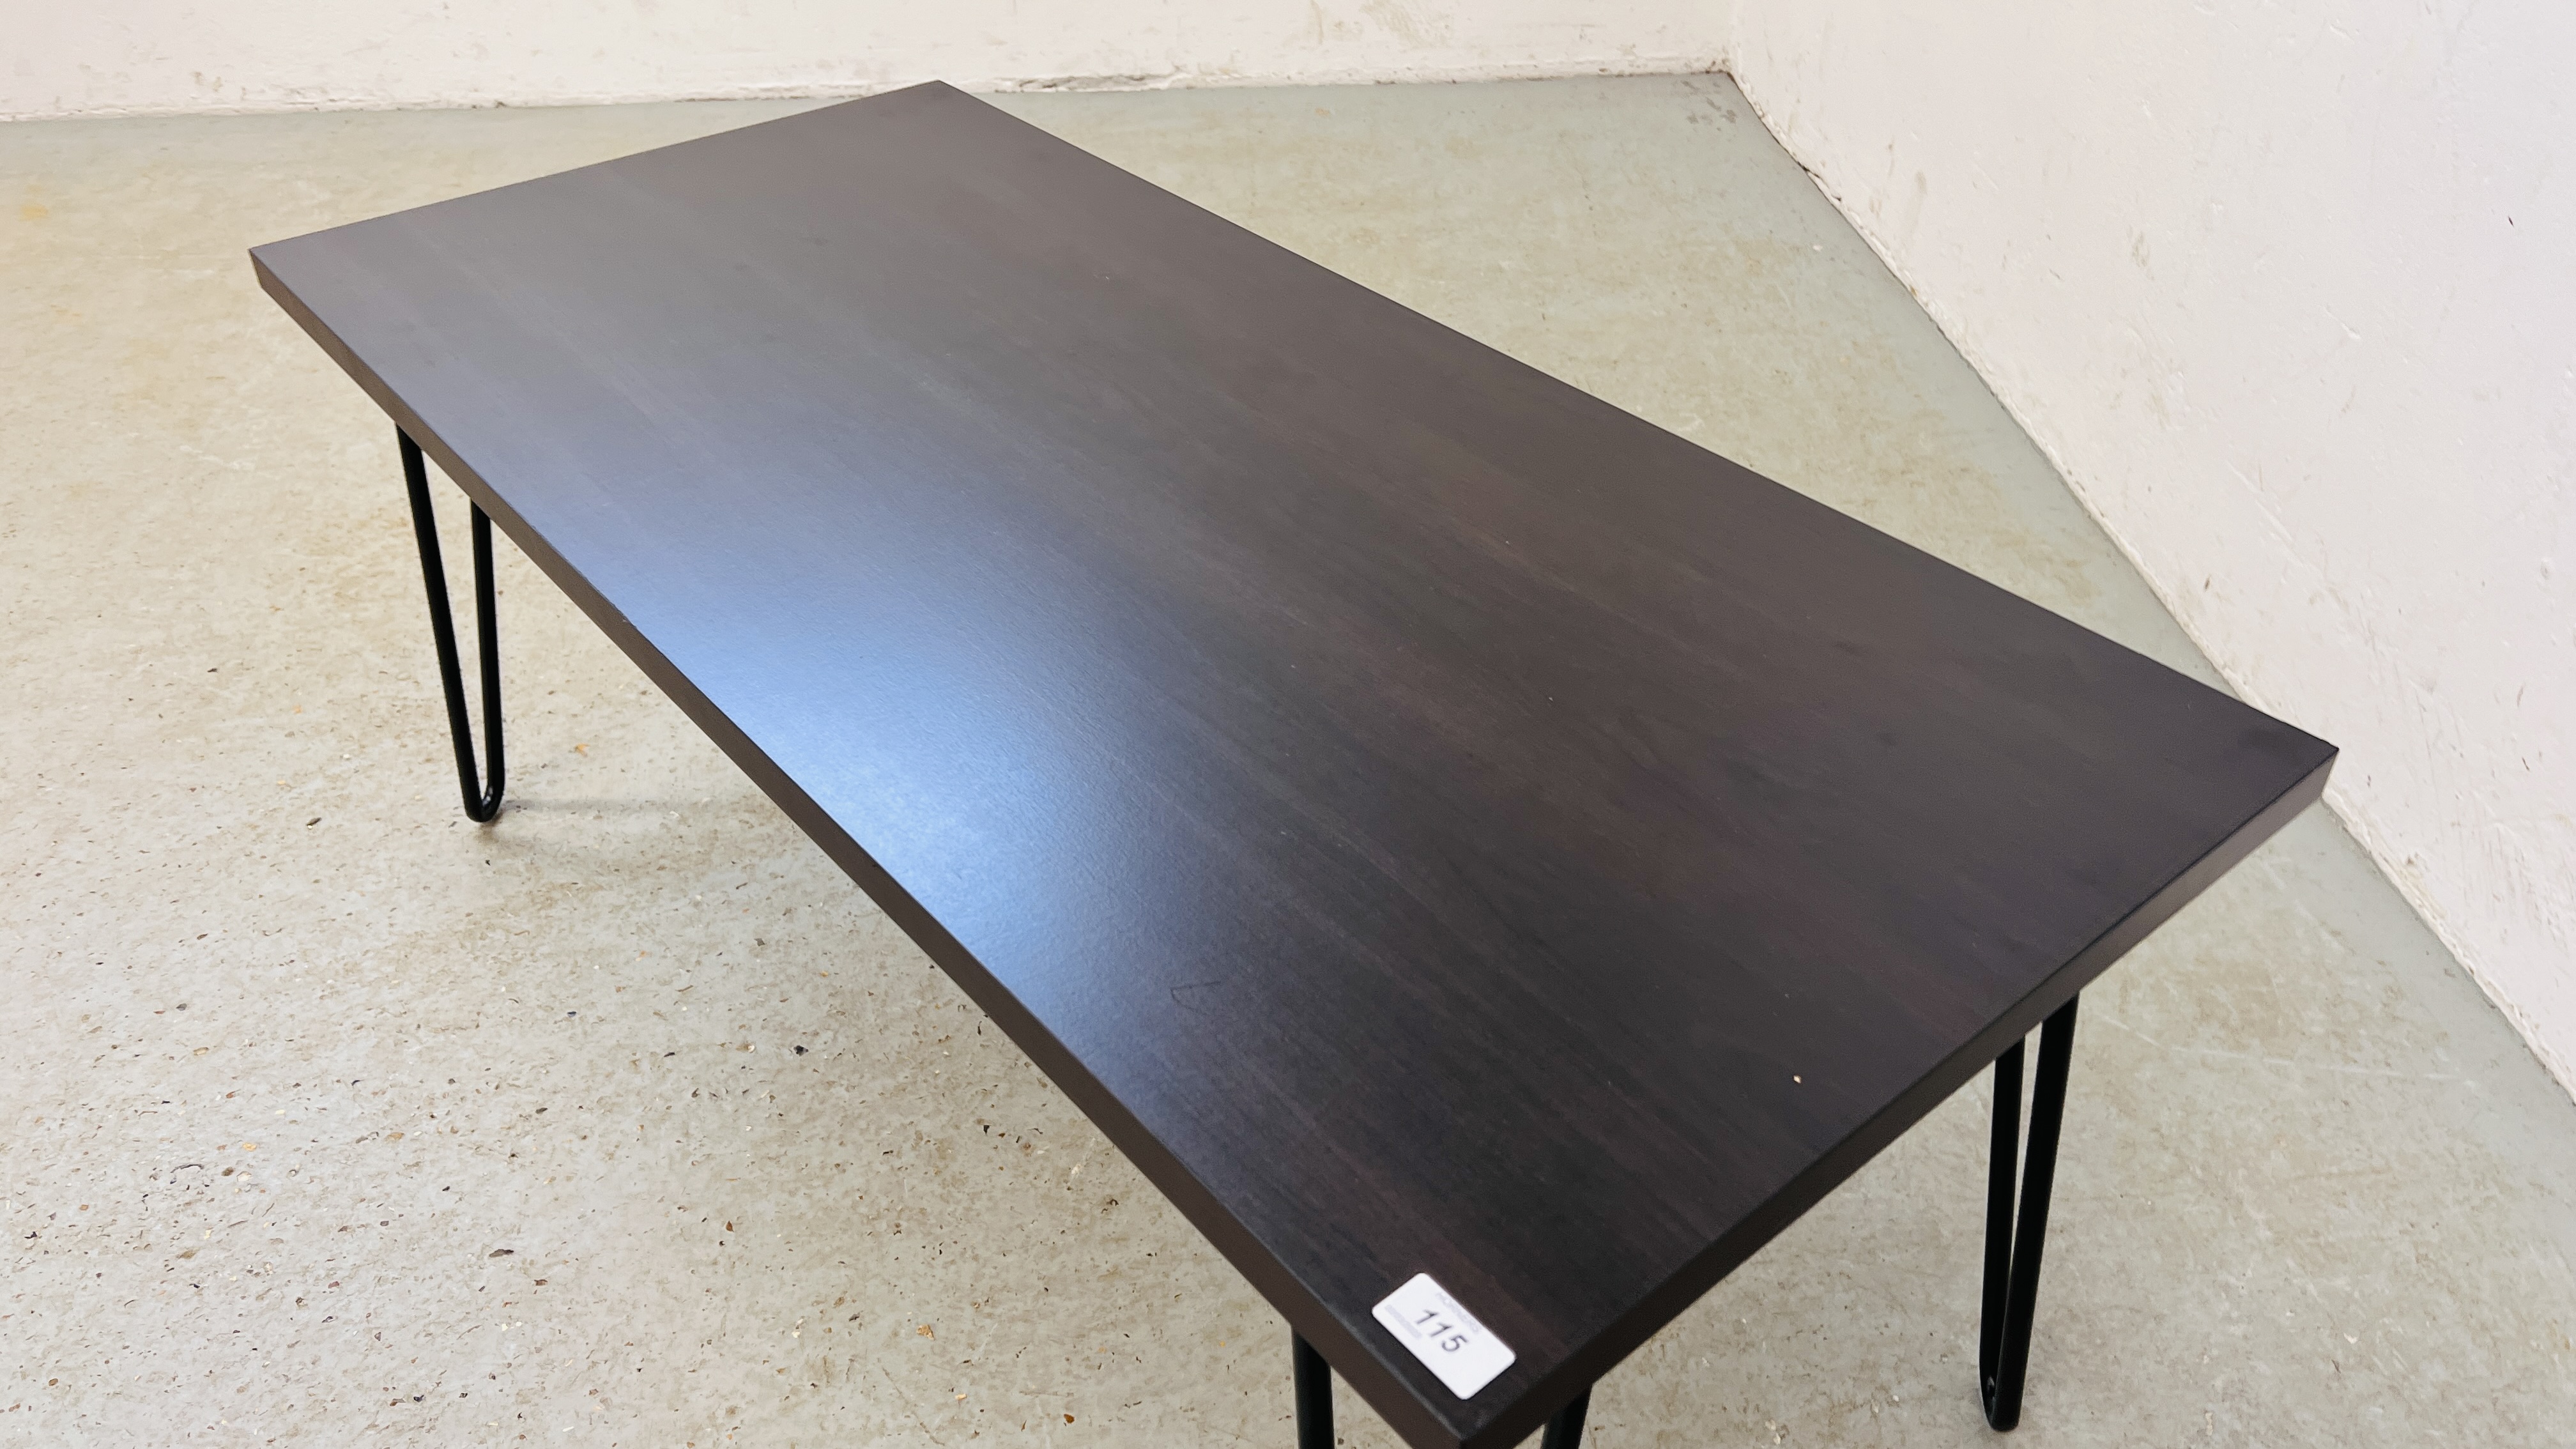 A MODERN RECTANGULAR COFFEE TABLE ON METAL U LEGS - Image 3 of 8